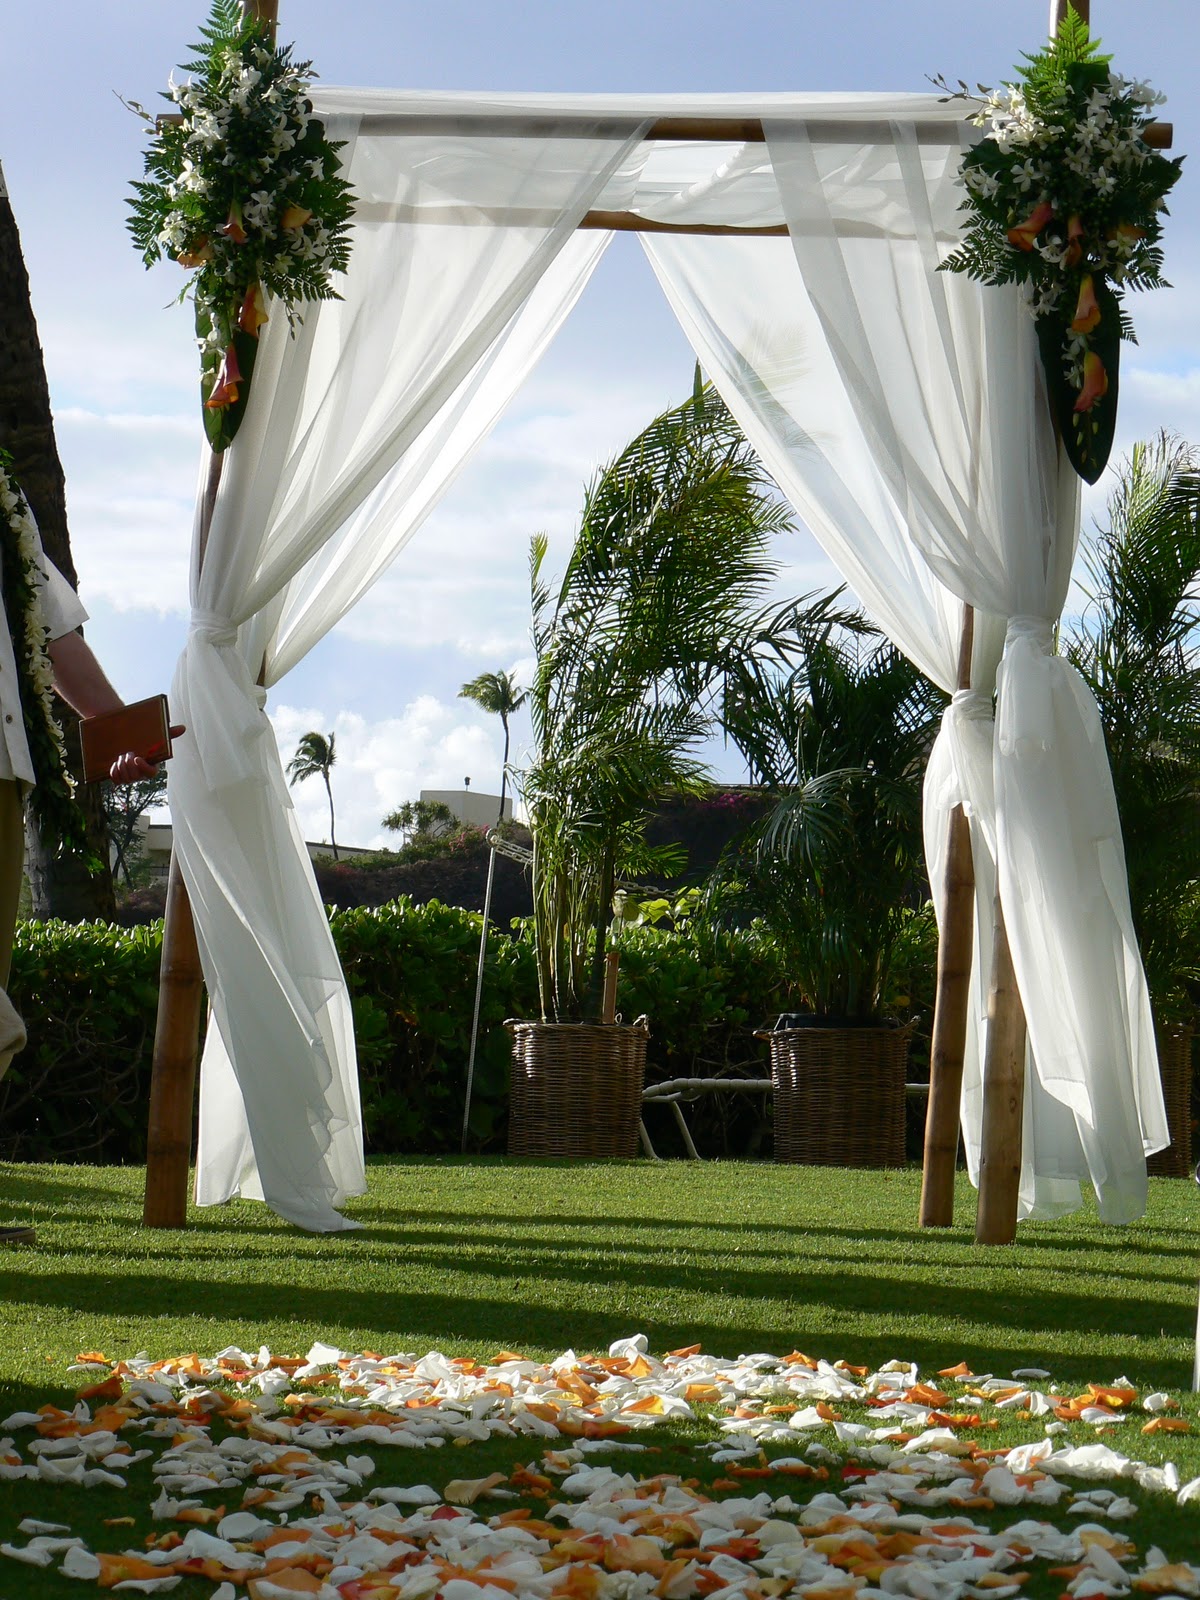 Ku O Lani Floral + Designs: Wedding Chuppa and Arch floral designs